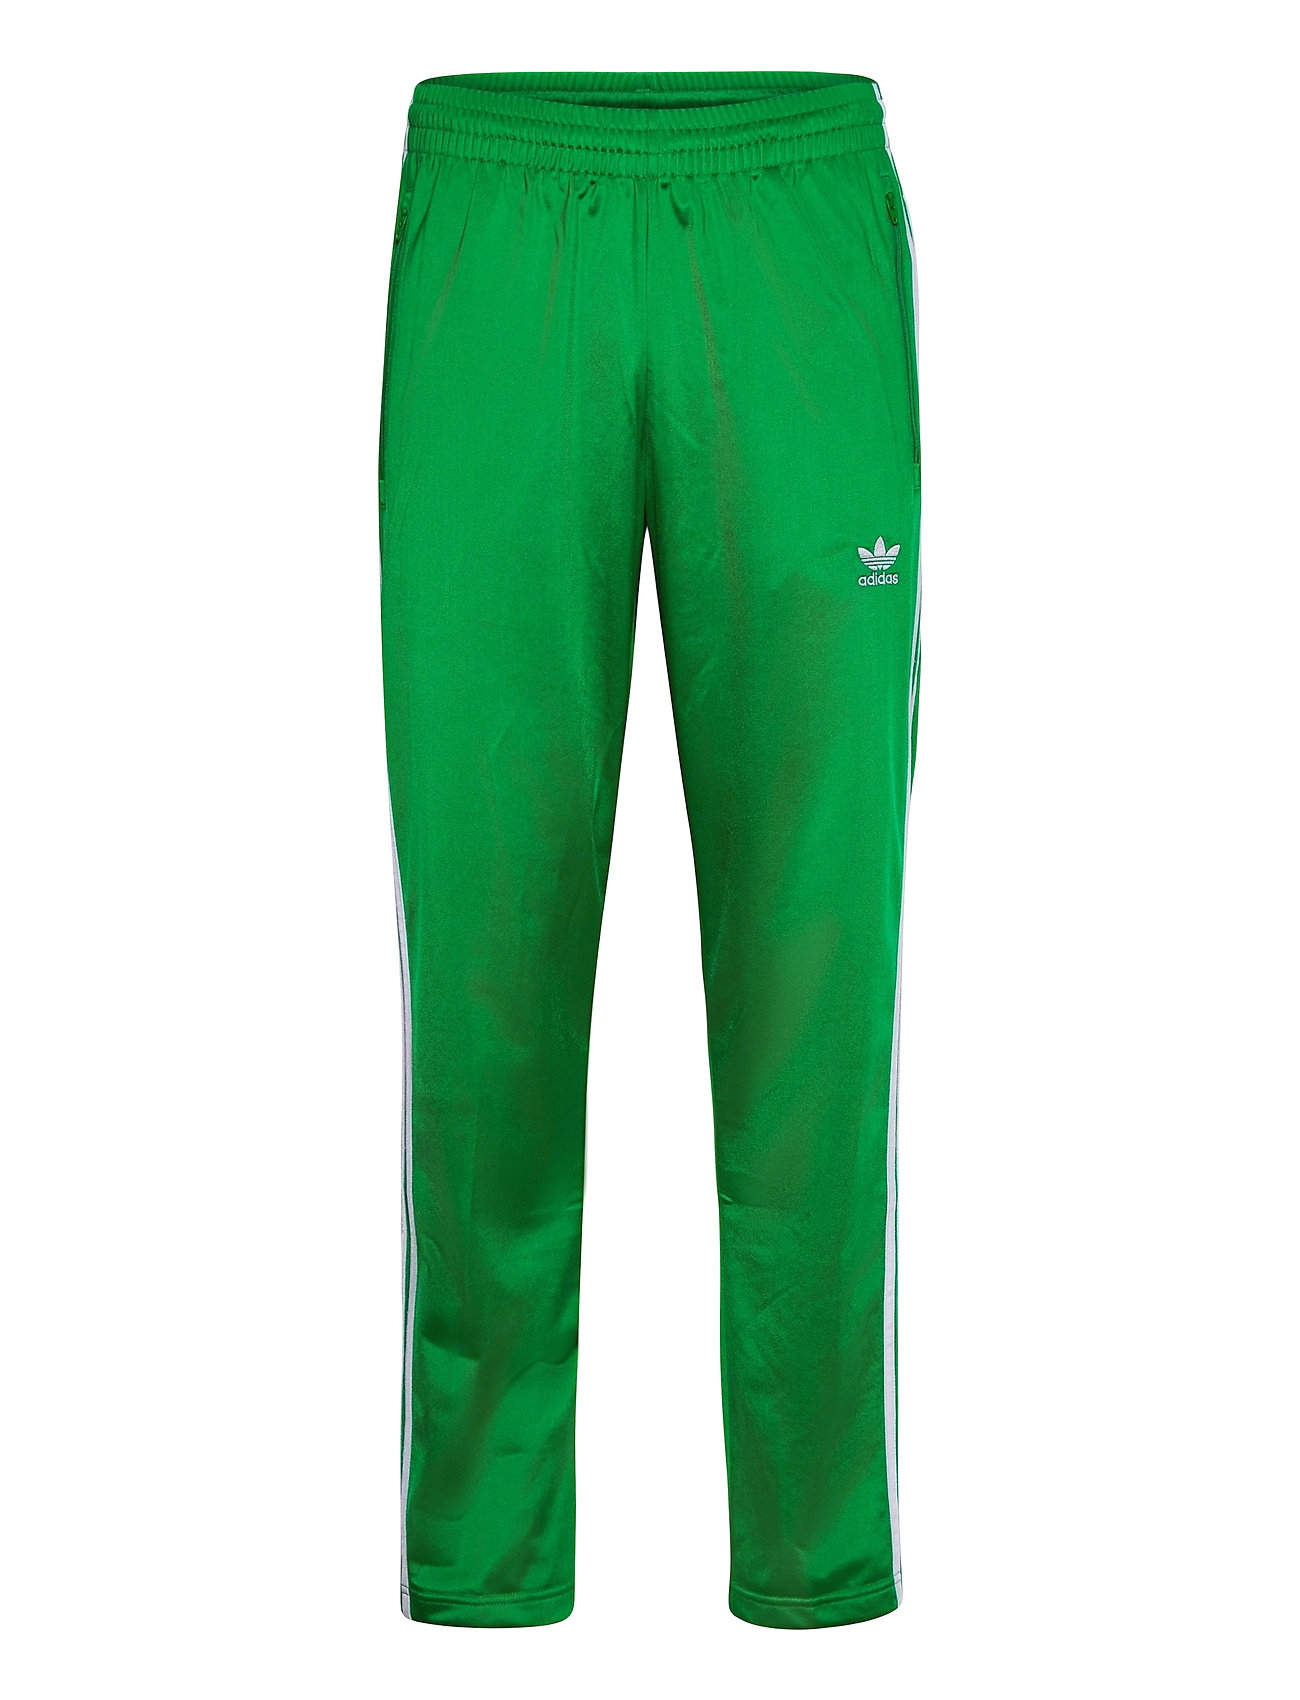 Adidas Classics Primeblue Track Pants Sweatpants Hyggebukser Grøn Adidas Originals bukser for herre - Pashion.dk